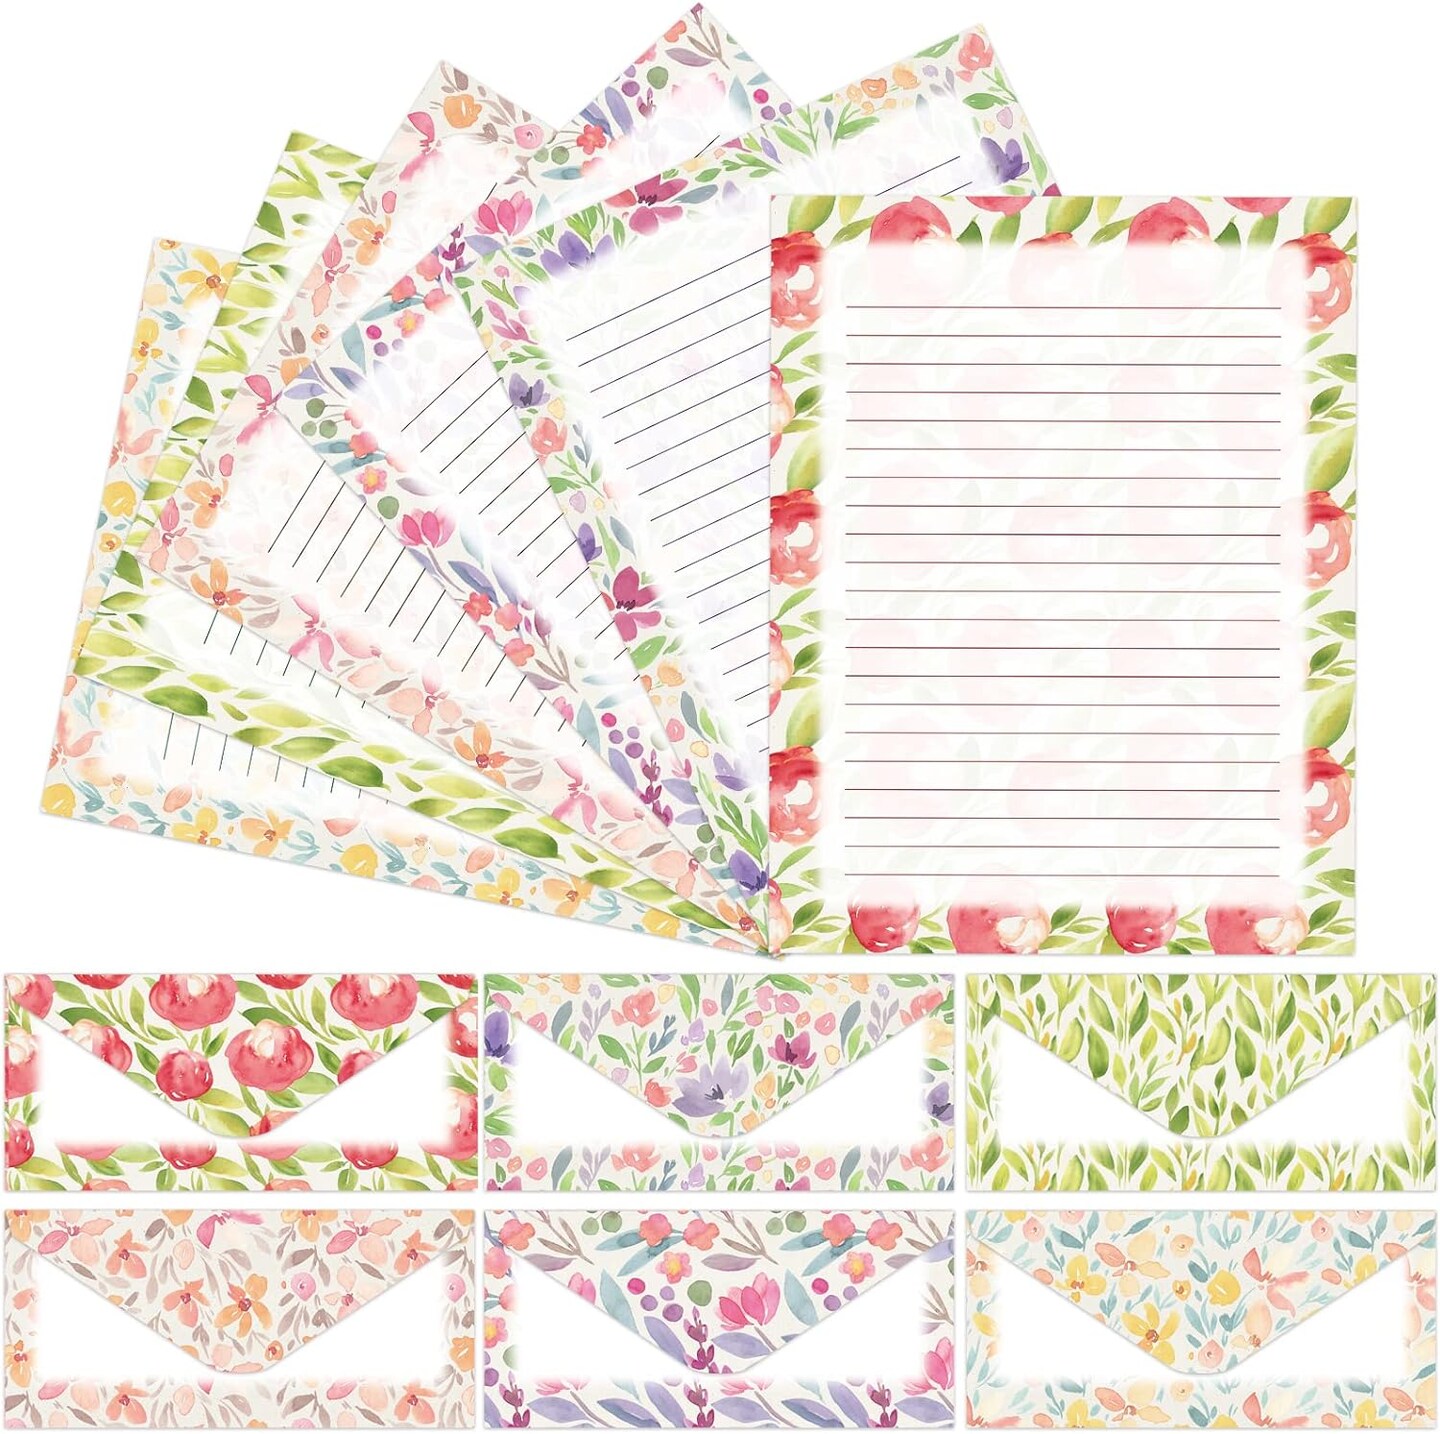 Kitcheniva Floral Stationary Paper with Envelopes